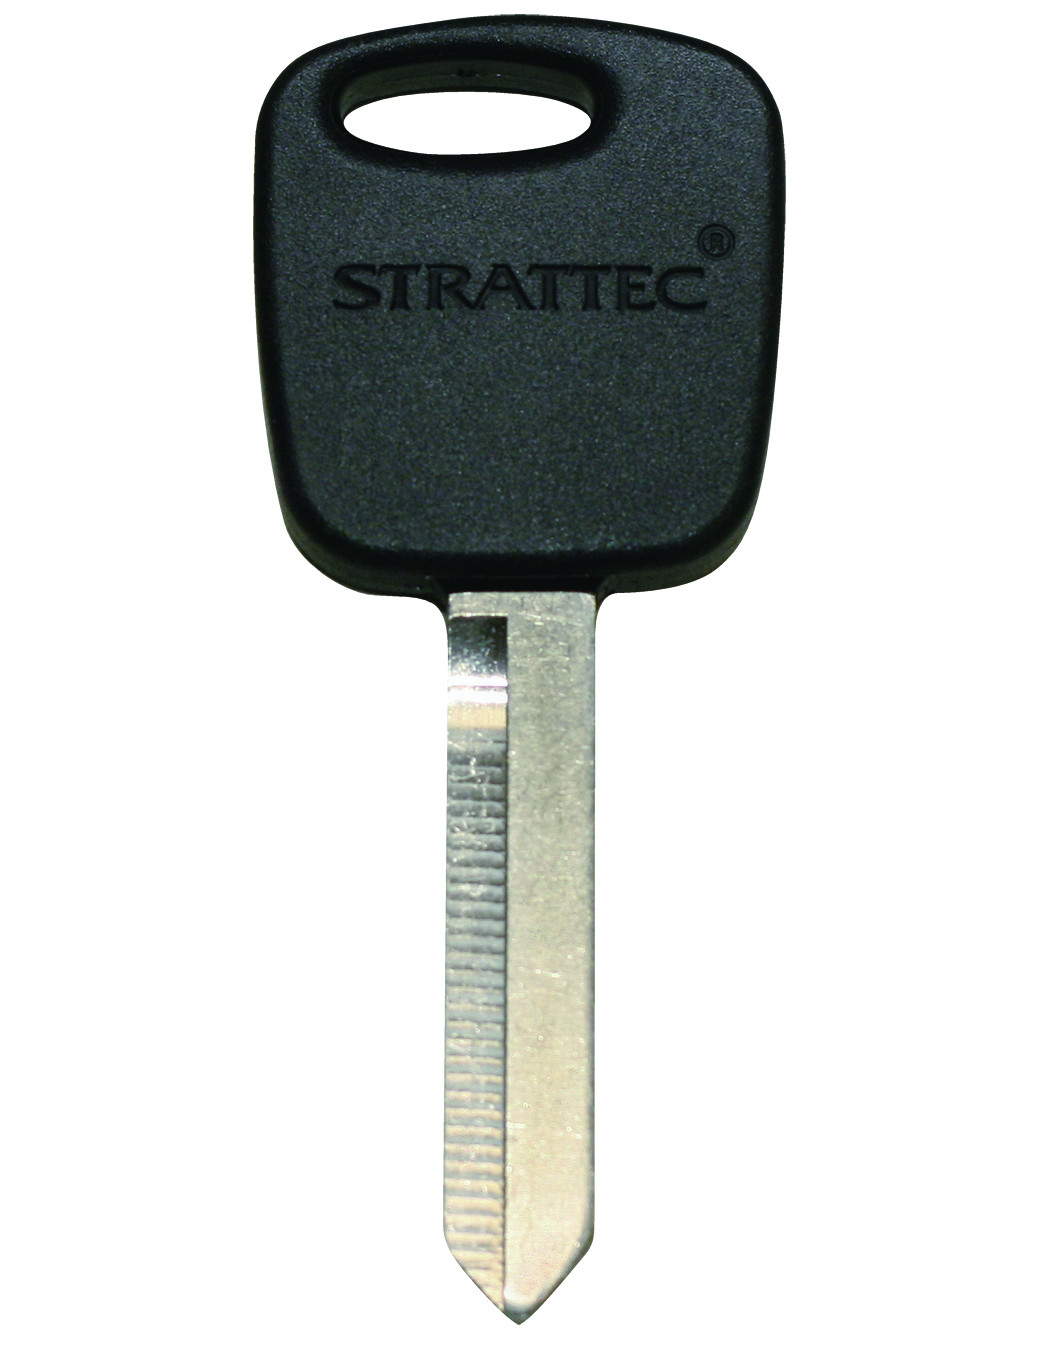 NEW GM Saturn Strattec Logo Non-Transponder Key Blank B96 P1110 692076 NO Chip 